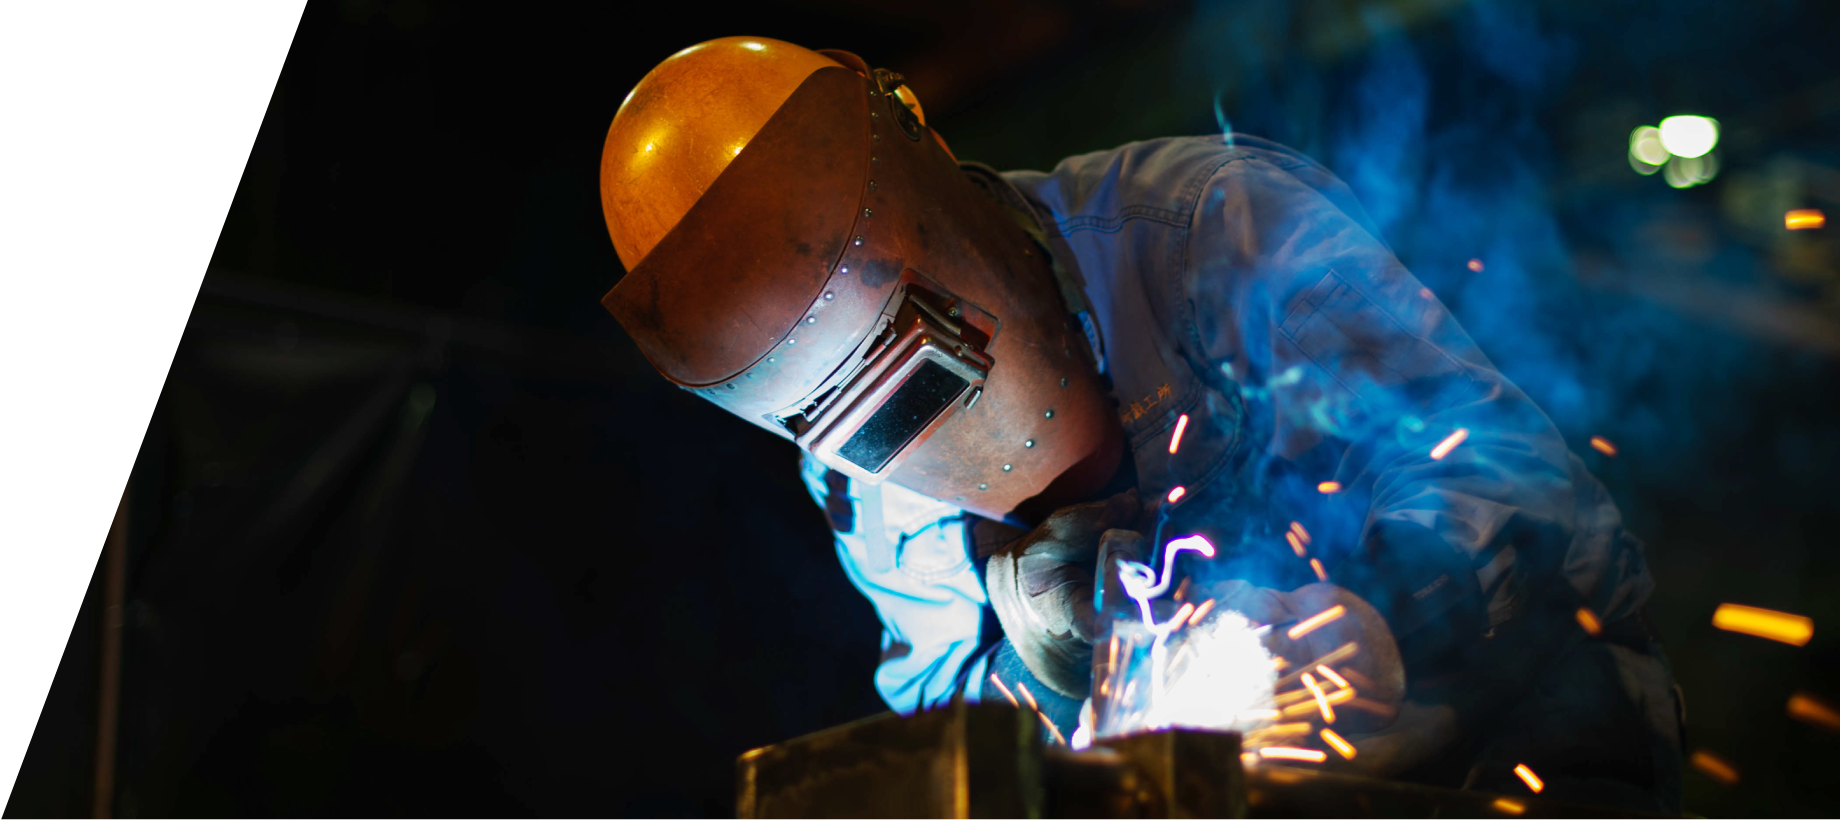 Employee welding using a handheld welding mask